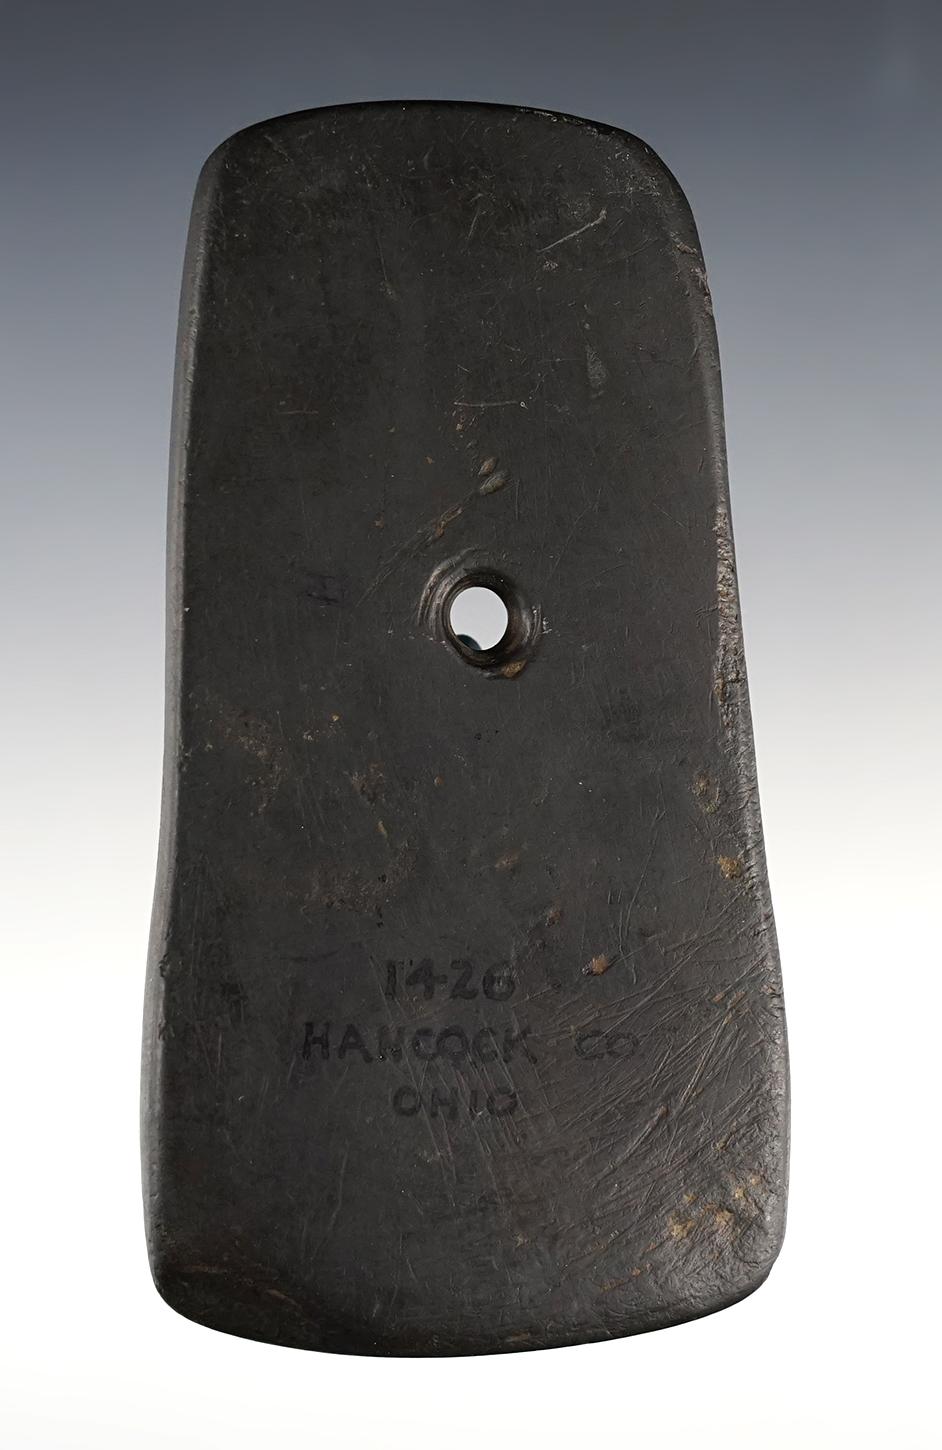 4 5/16" Adena Trapezoidal Pendant found in Hancock Co., Ohio. Ex. Wehrle (1426W), Root (3107S).